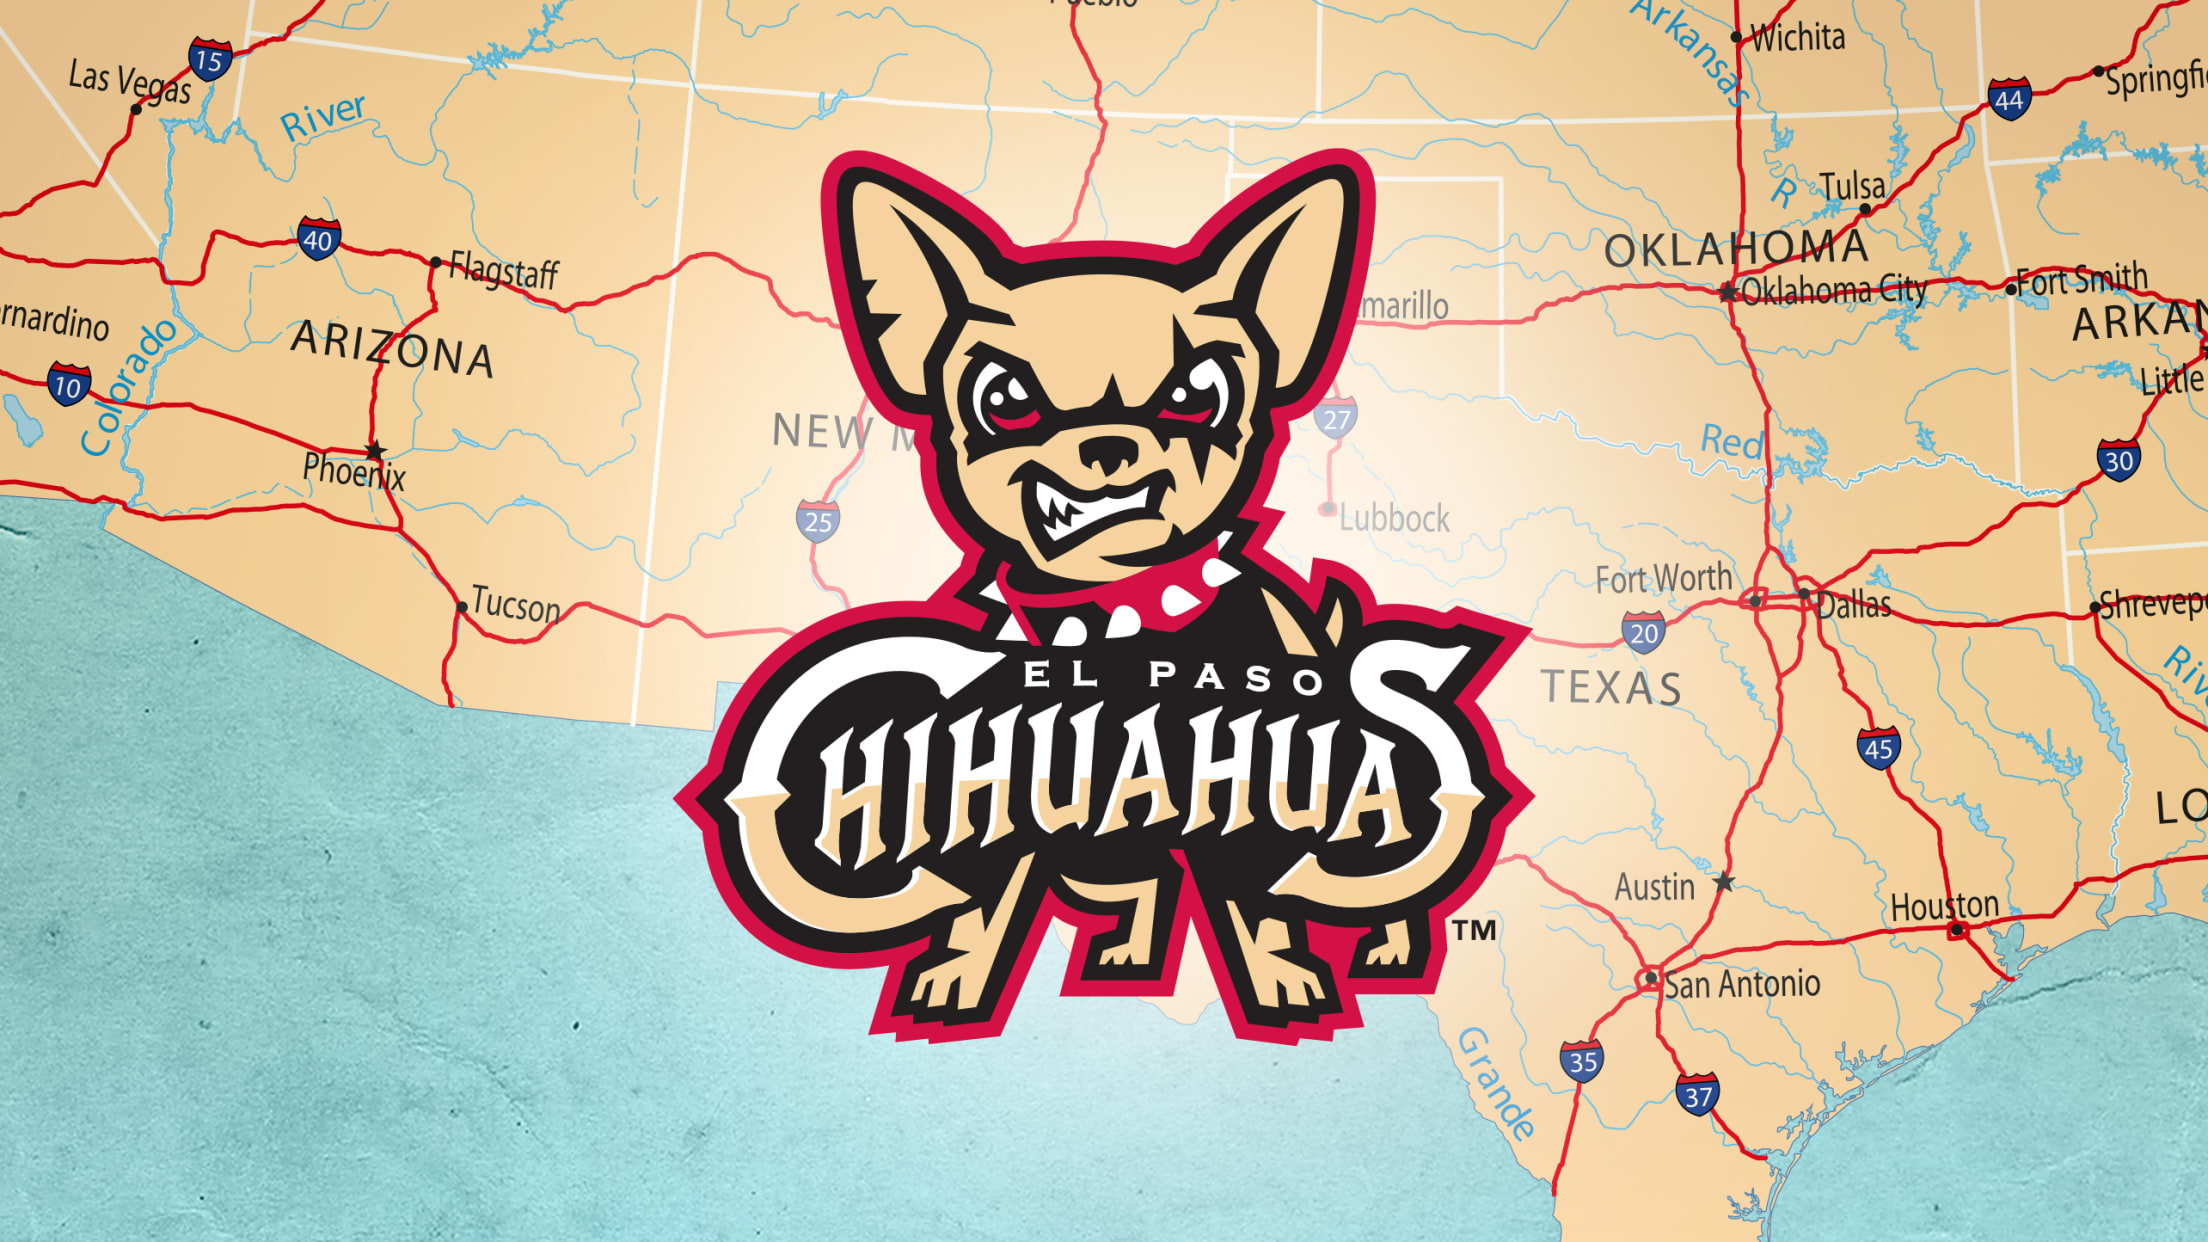 Visit Southwest University Park home of the El Paso Chihuahuas